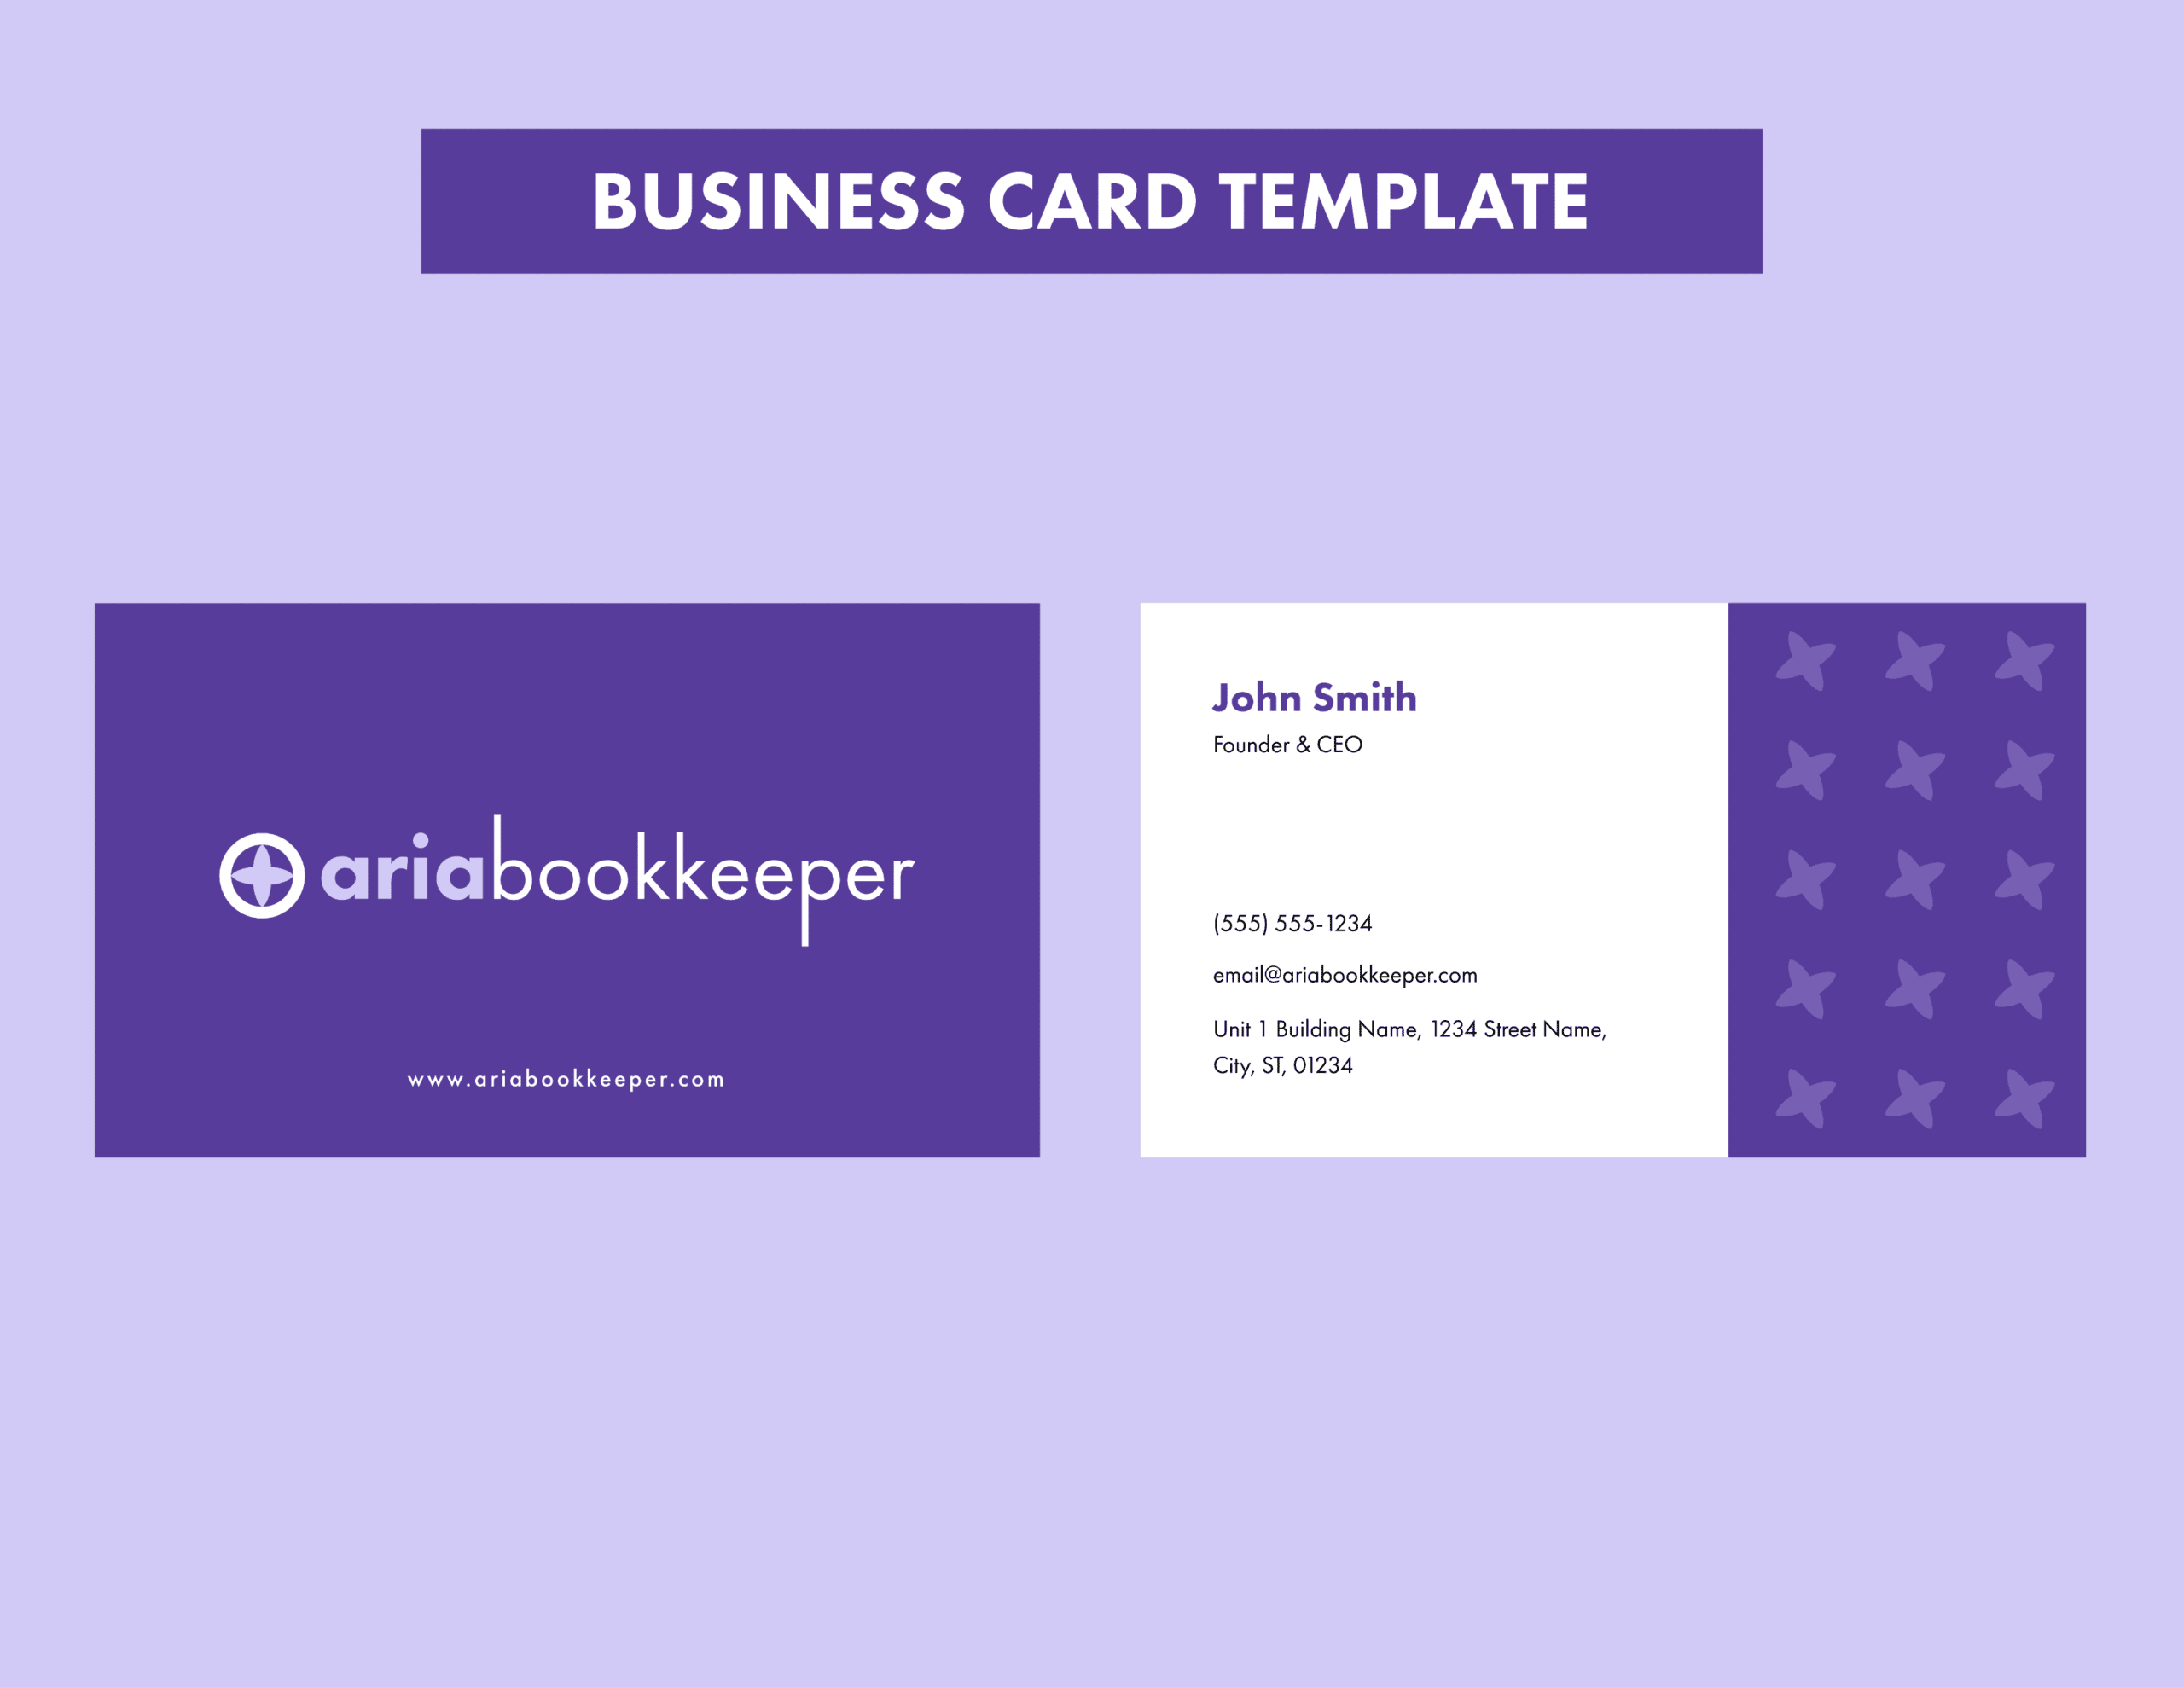 04Aria_Showcase_Business Card Template